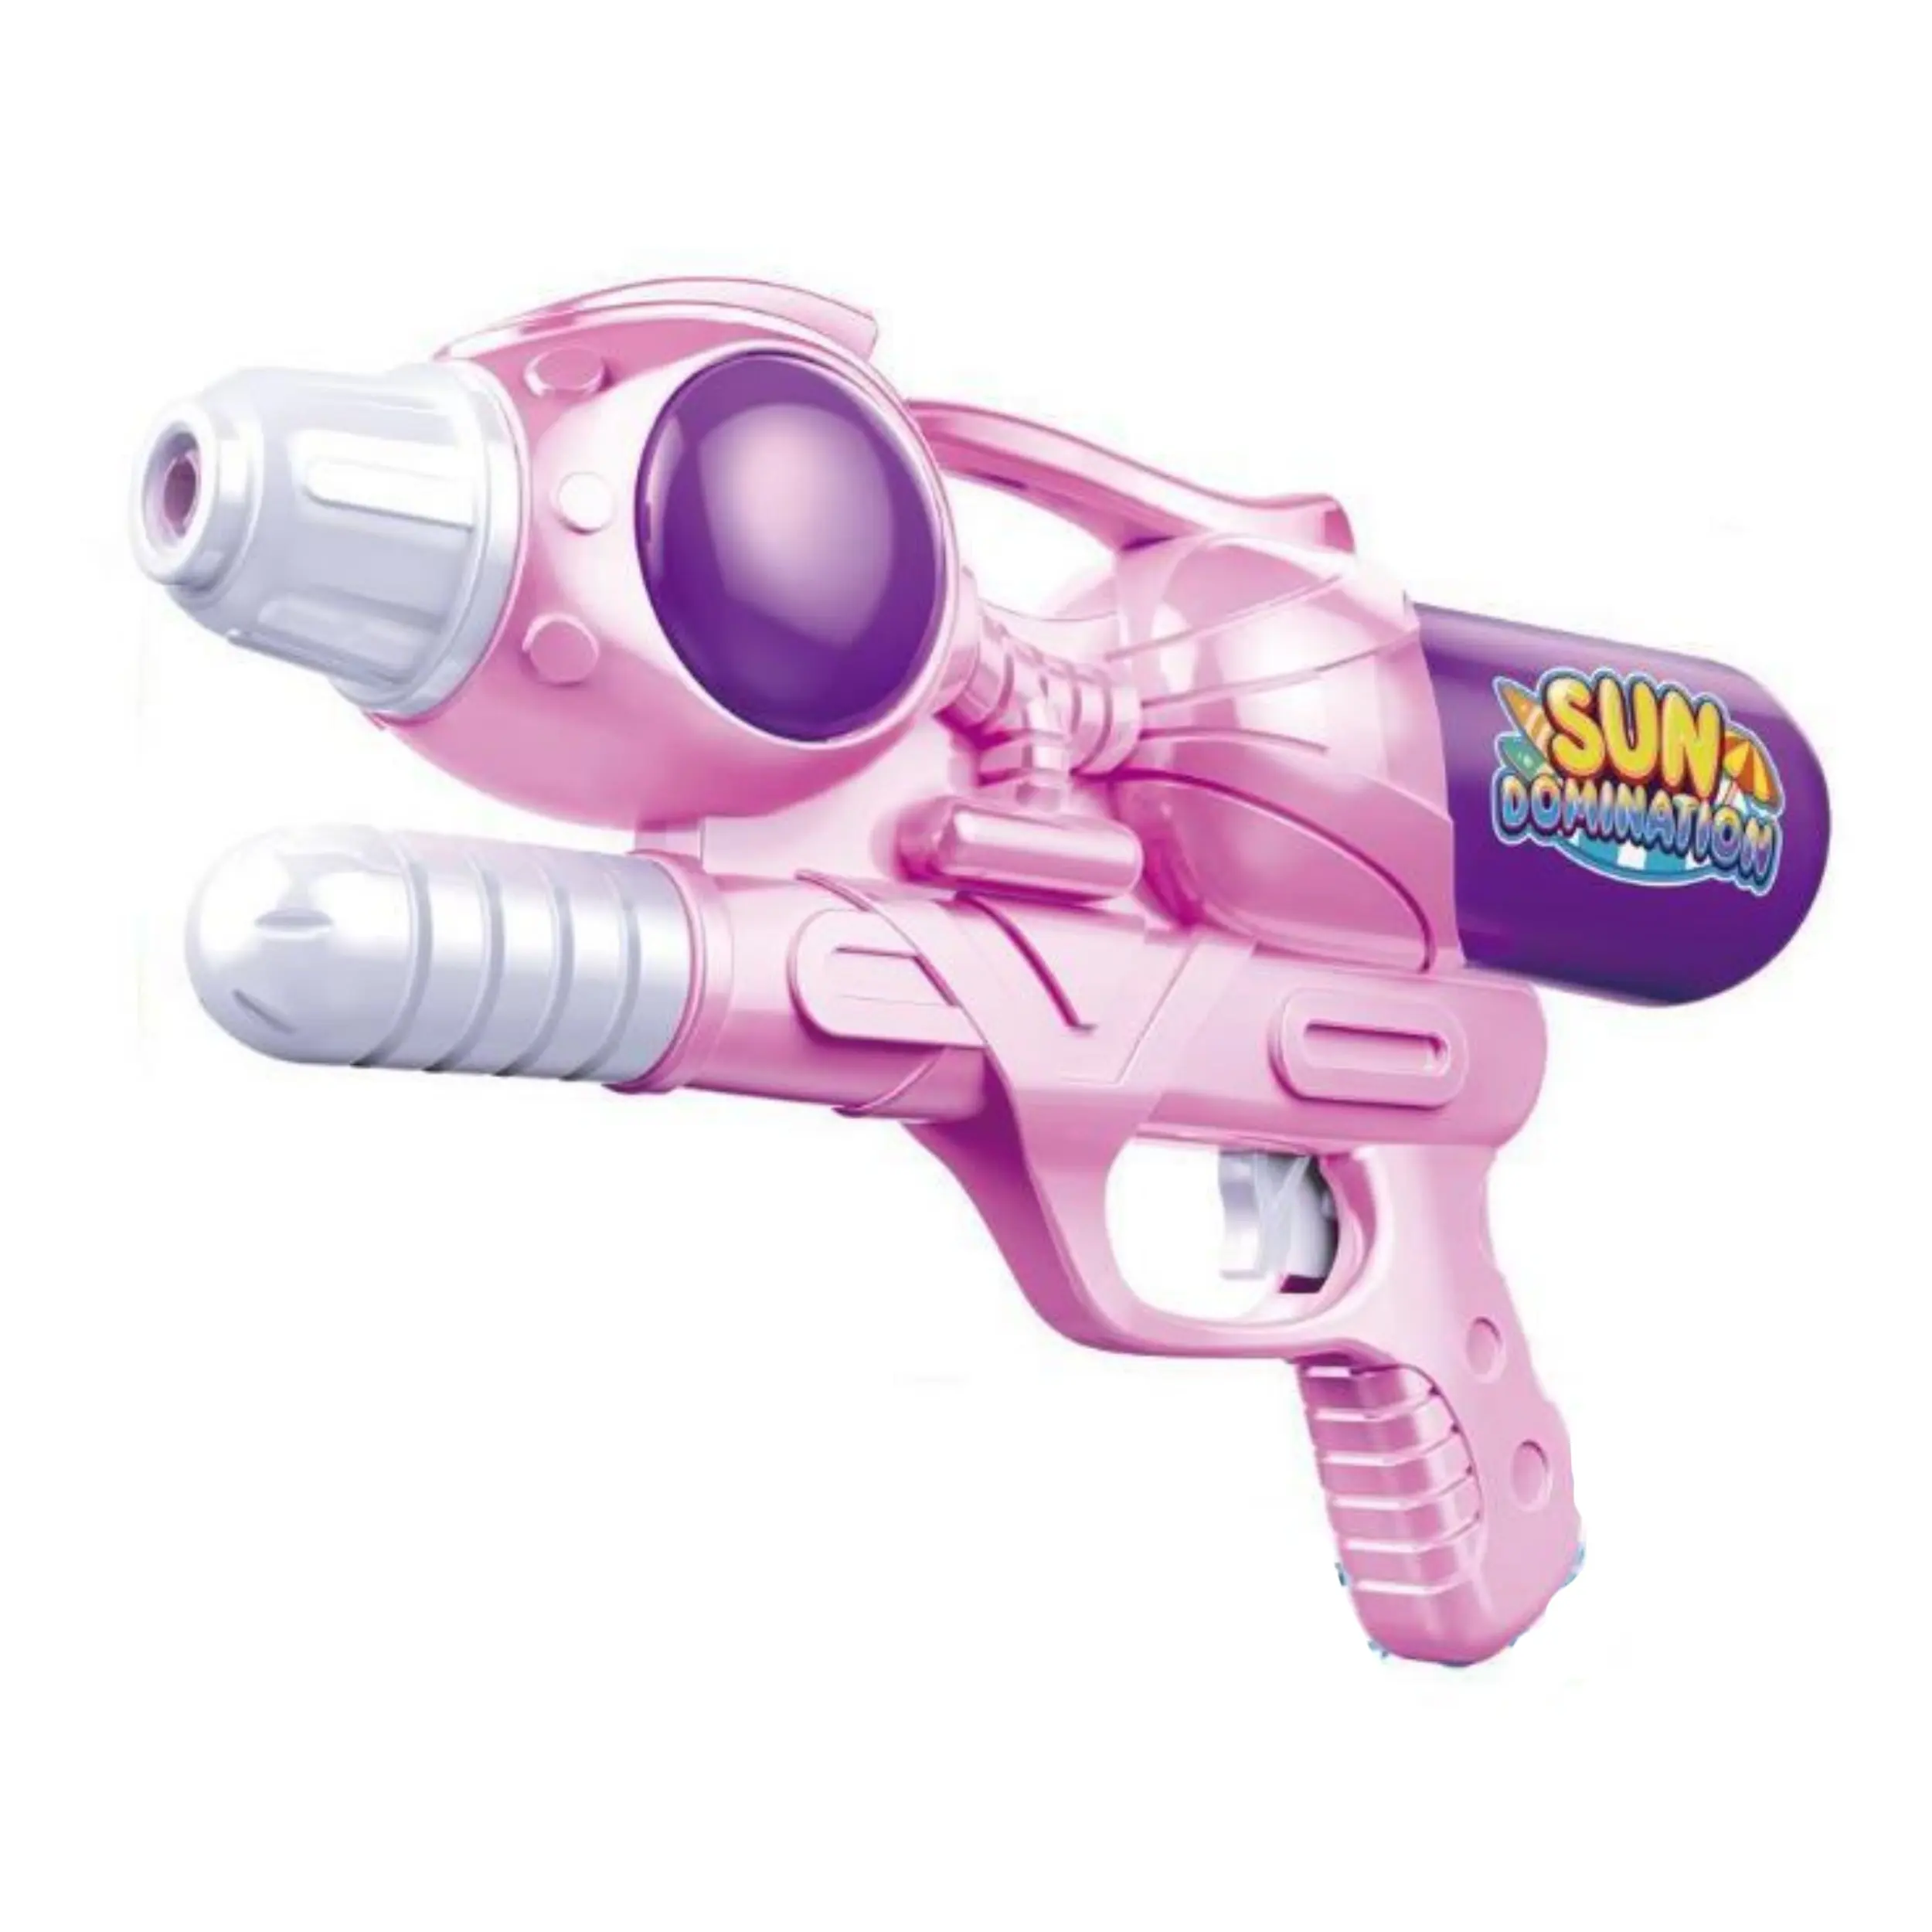 Produsen mainan meriam jet air pistol semprot kecil percikan pantai luar ruangan cantik grosir penjualan langsung kepada anak-anak musim panas